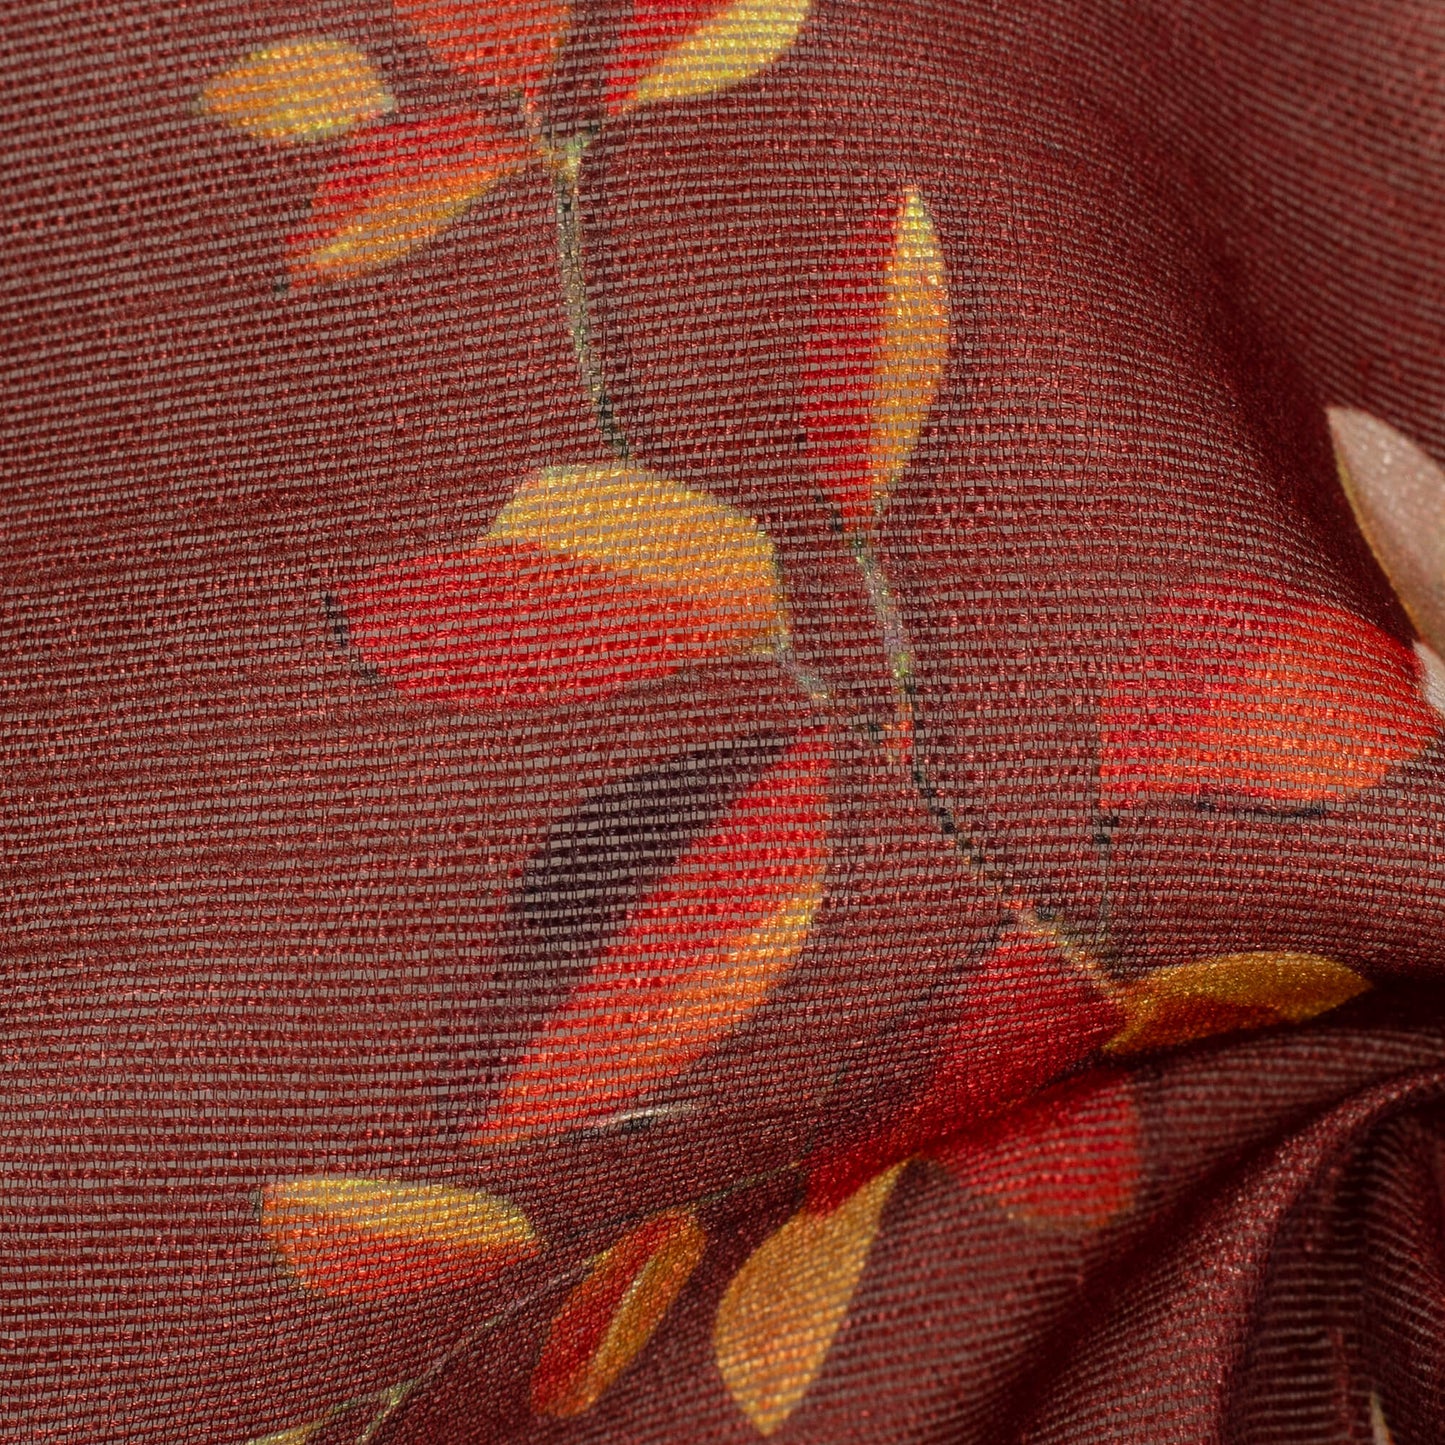 Coffee Brown And Cream Floral Pattern Digital Print Banglori Art Silk Fabric